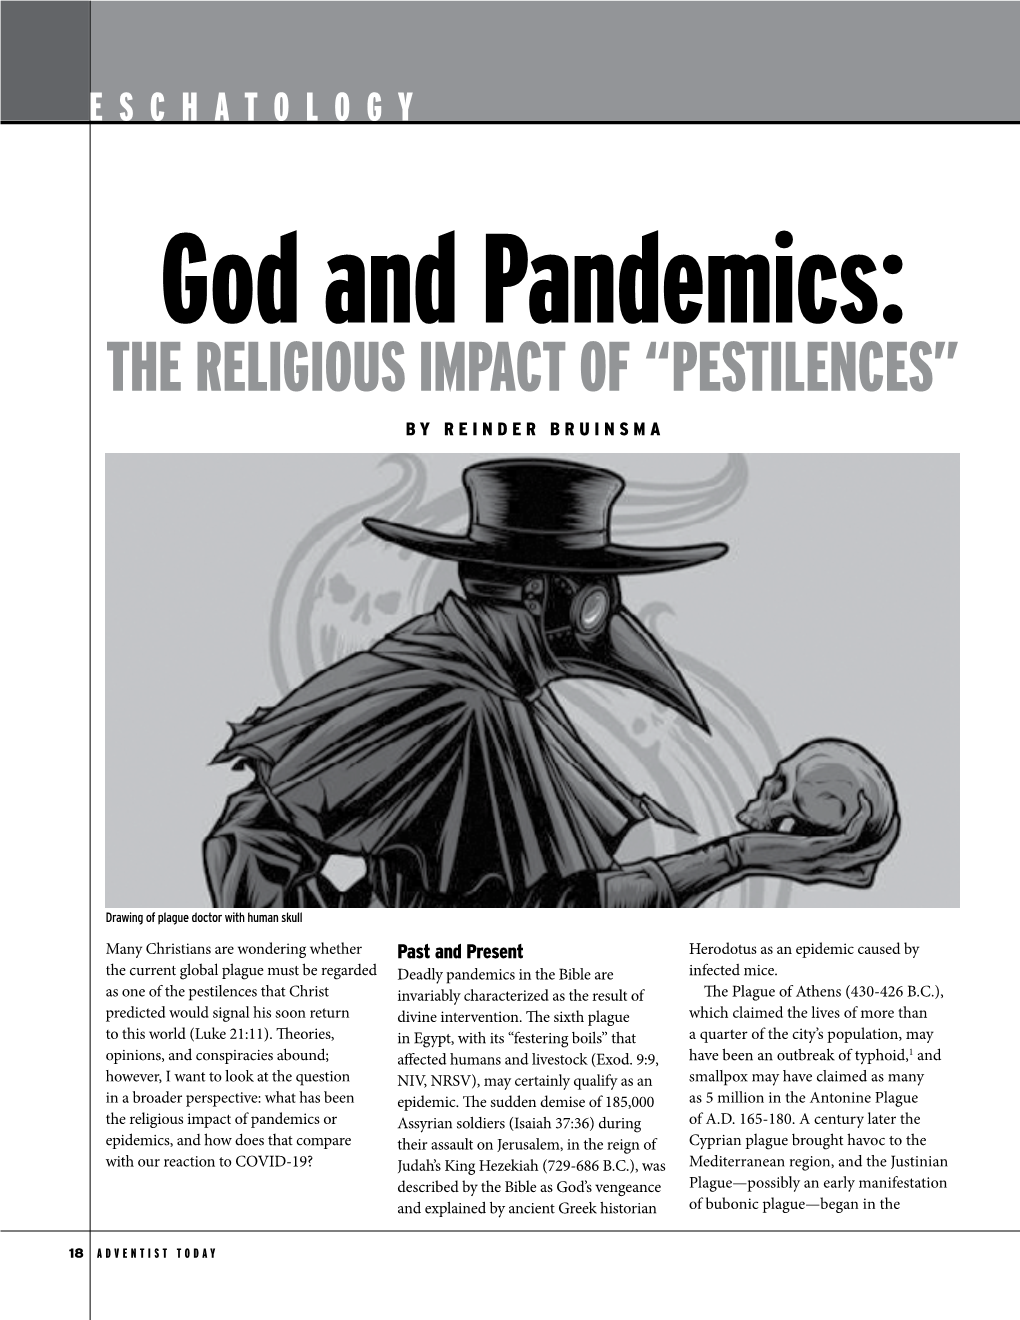 The Religious Impact of “Pestilences” by Reinder Bruinsma